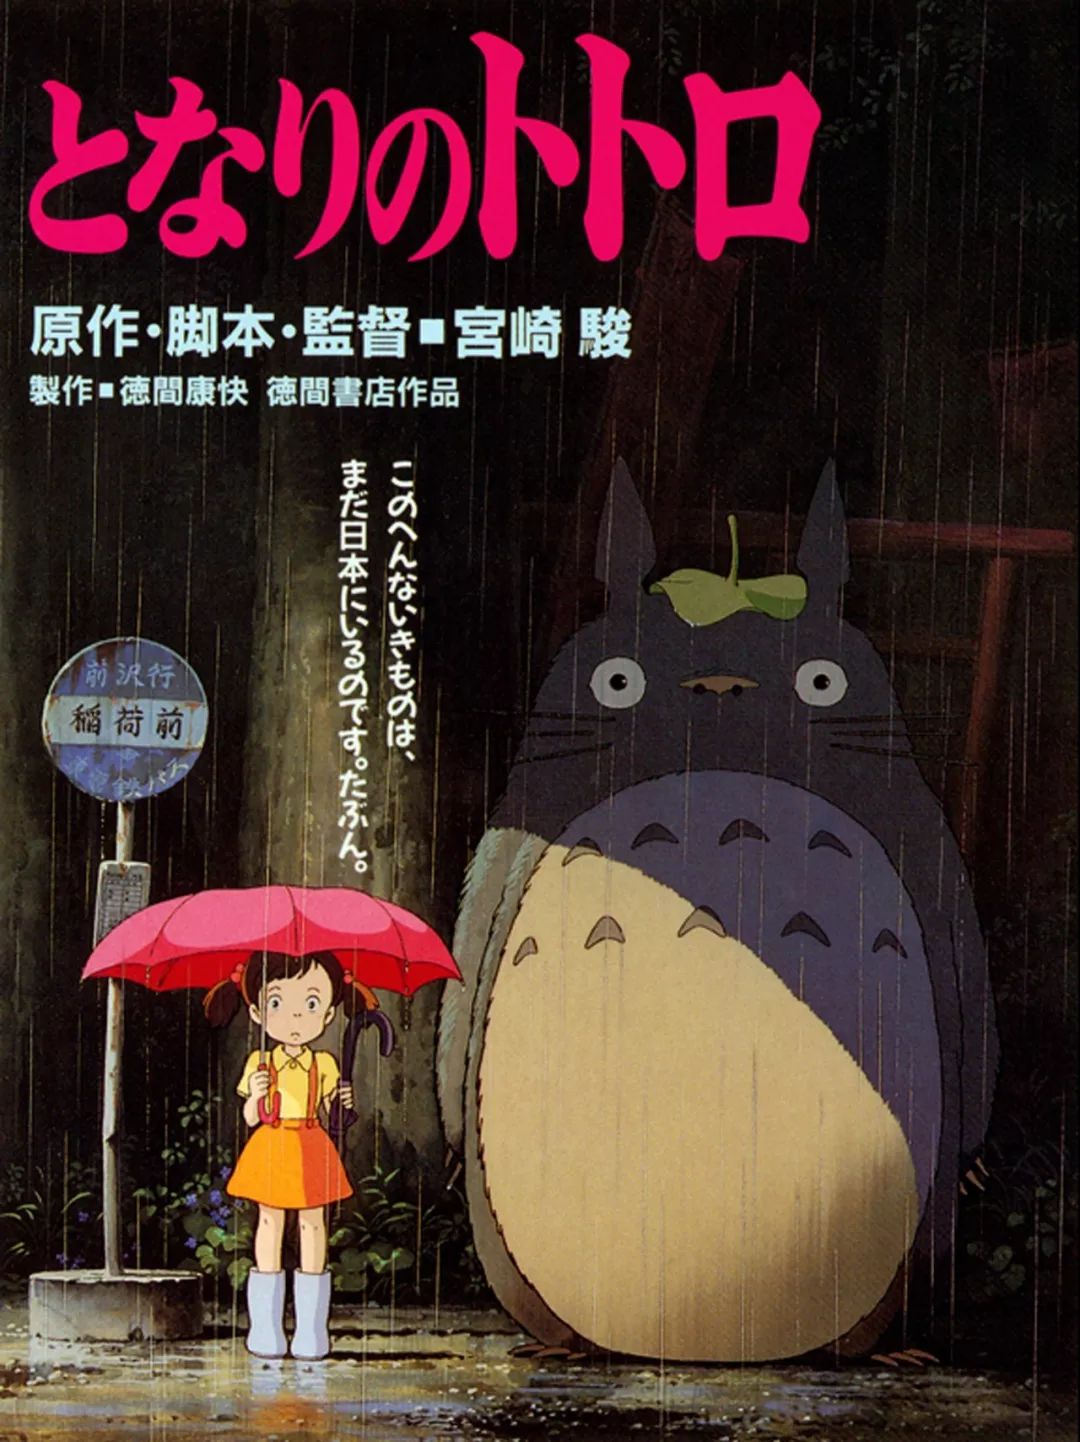 Tonari no Totoro (My Neighbor Totoro) Image #126422 - Zerochan Anime Image Board